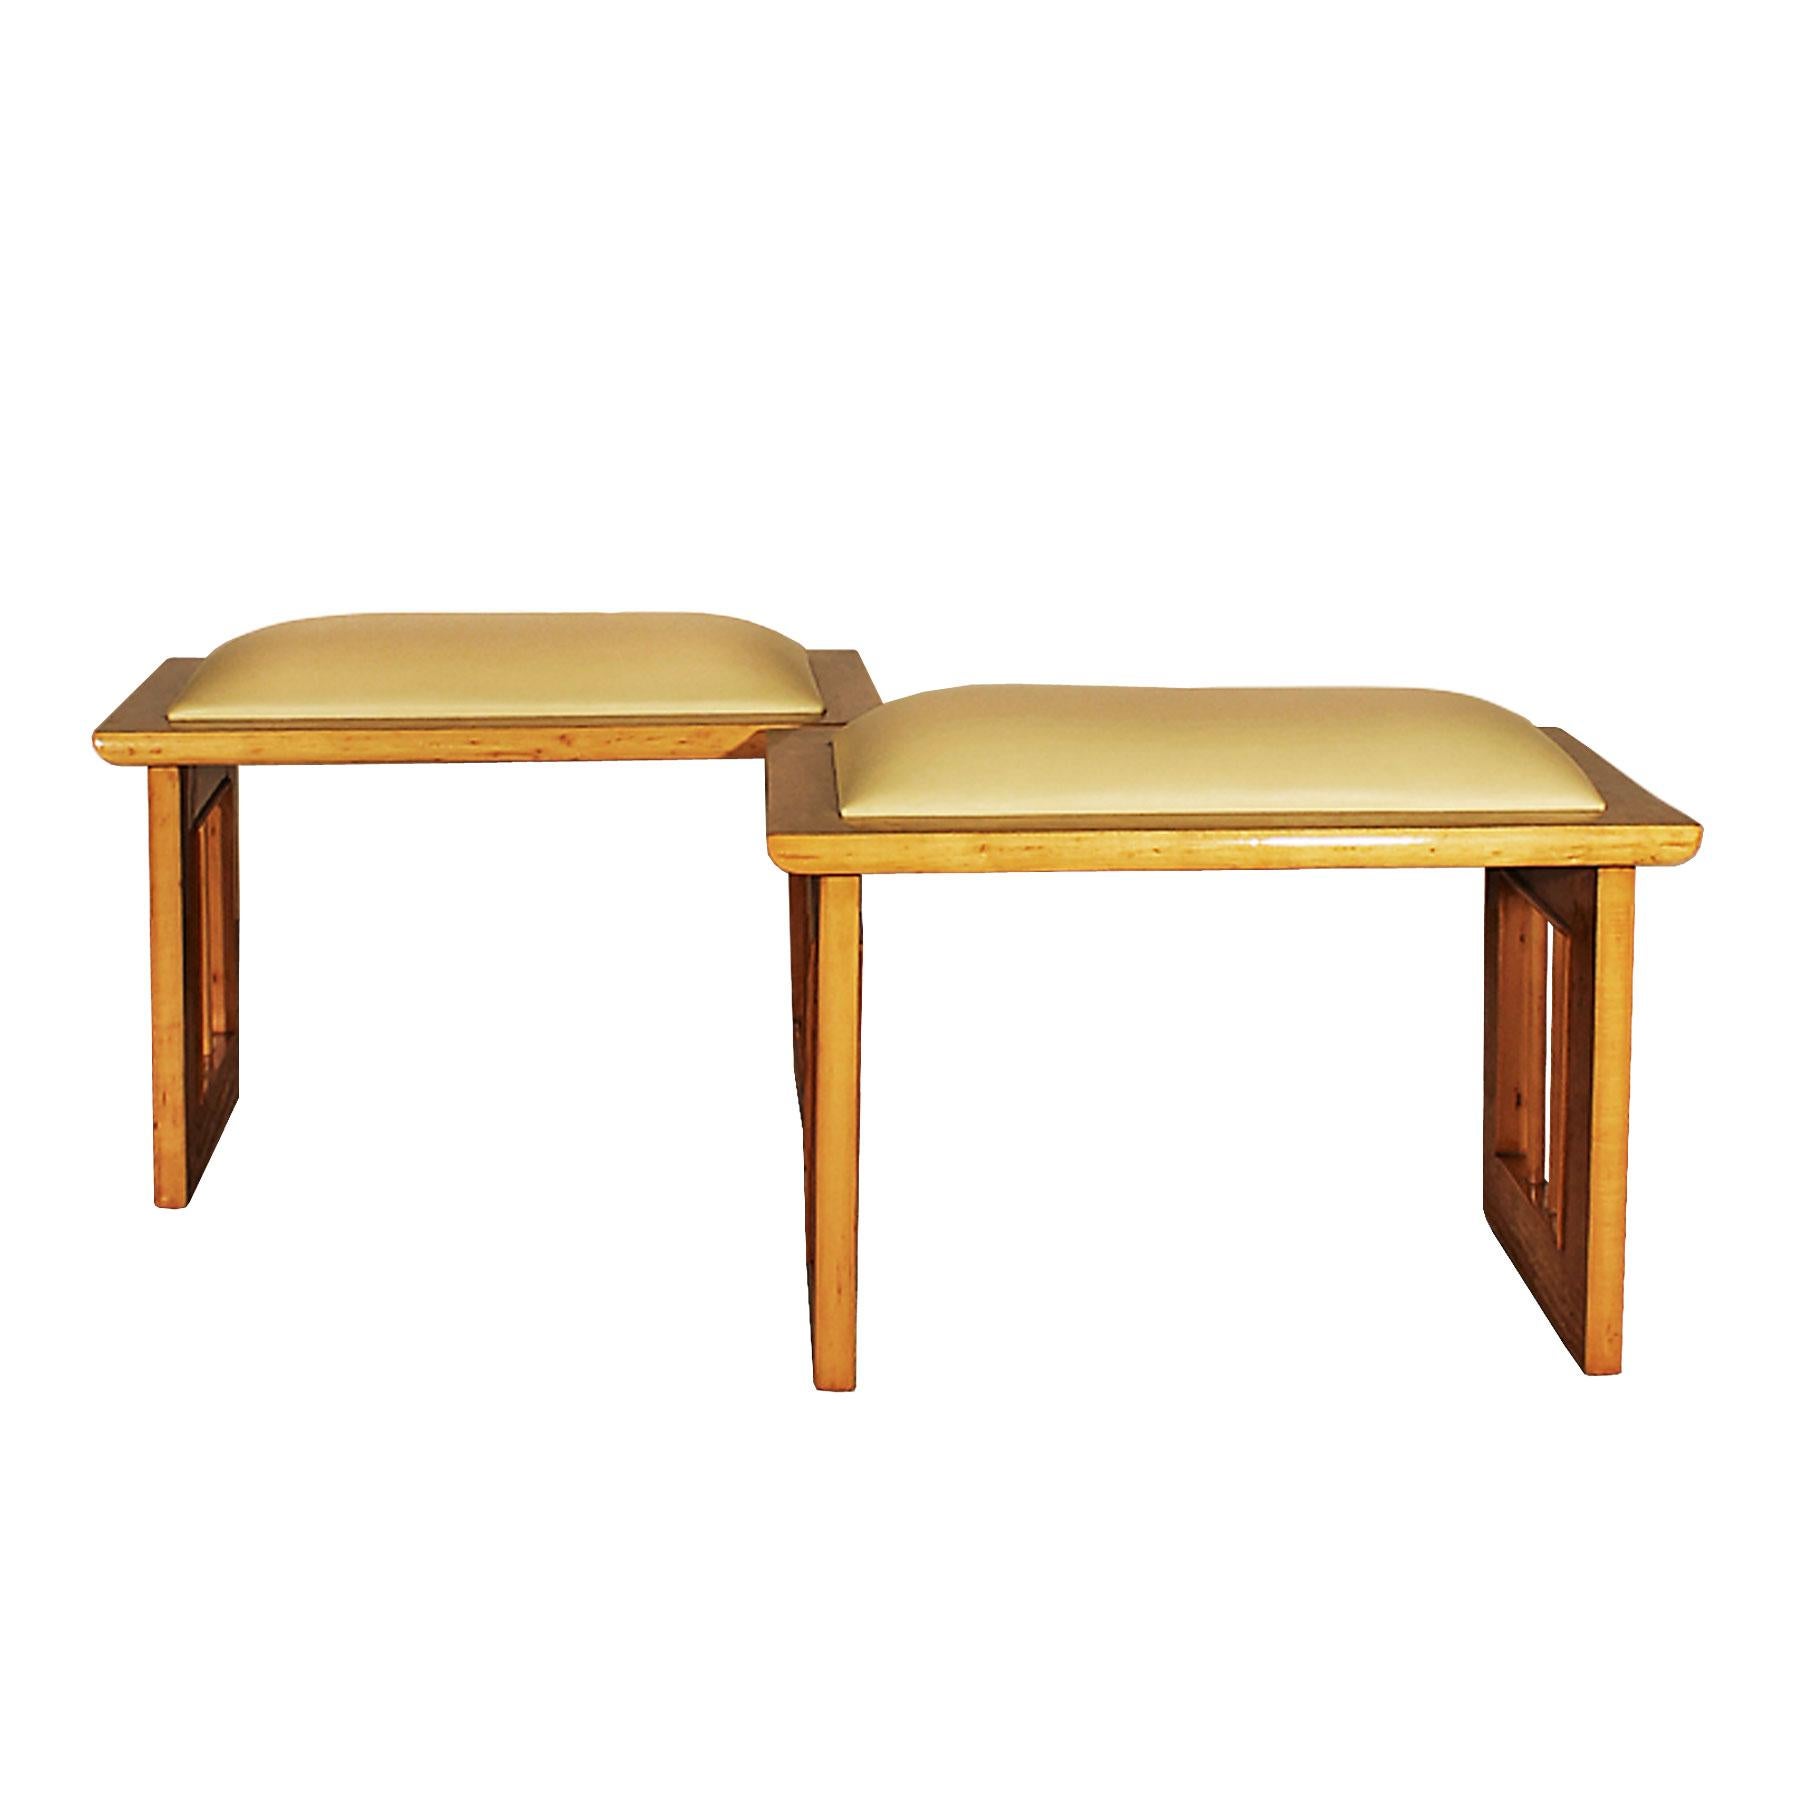 Pair of Art Deco stools, maple and burled elm tree veneer, ivory leather upholstery.
Italy, circa 1930.